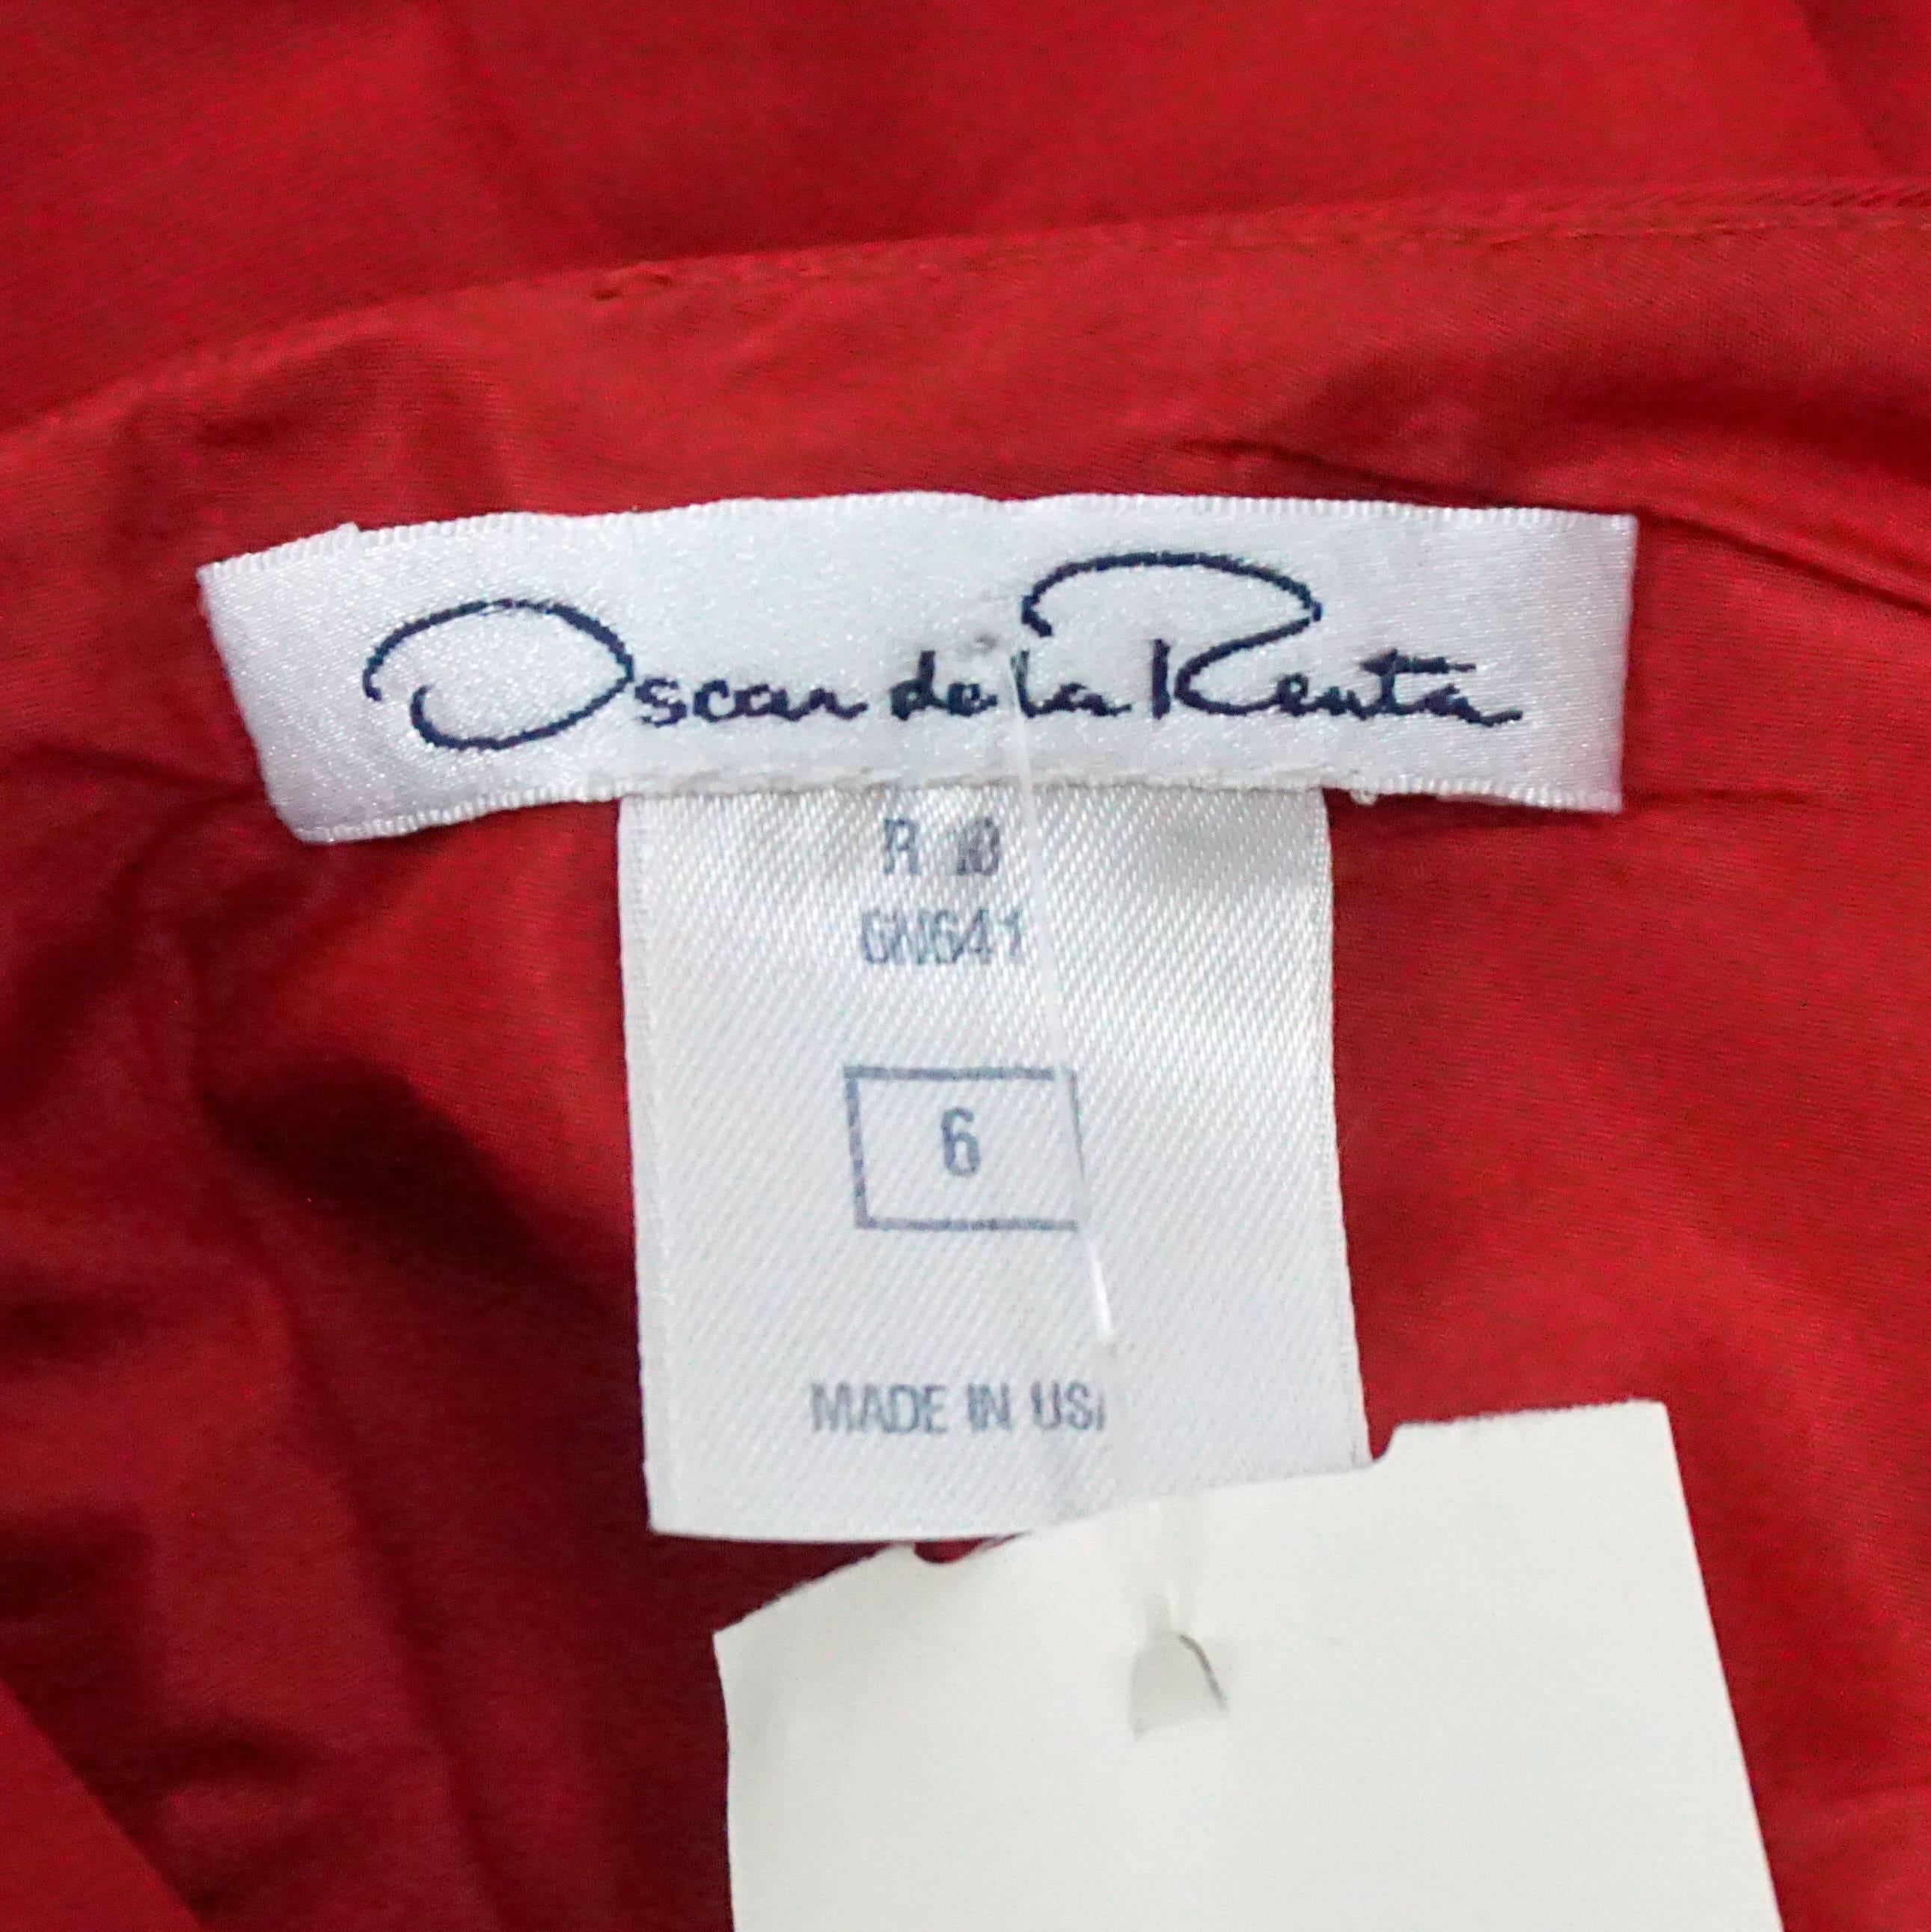 Oscar de la Renta Red Silk Taffeta Dress with Rose Detail - 6 For Sale 1